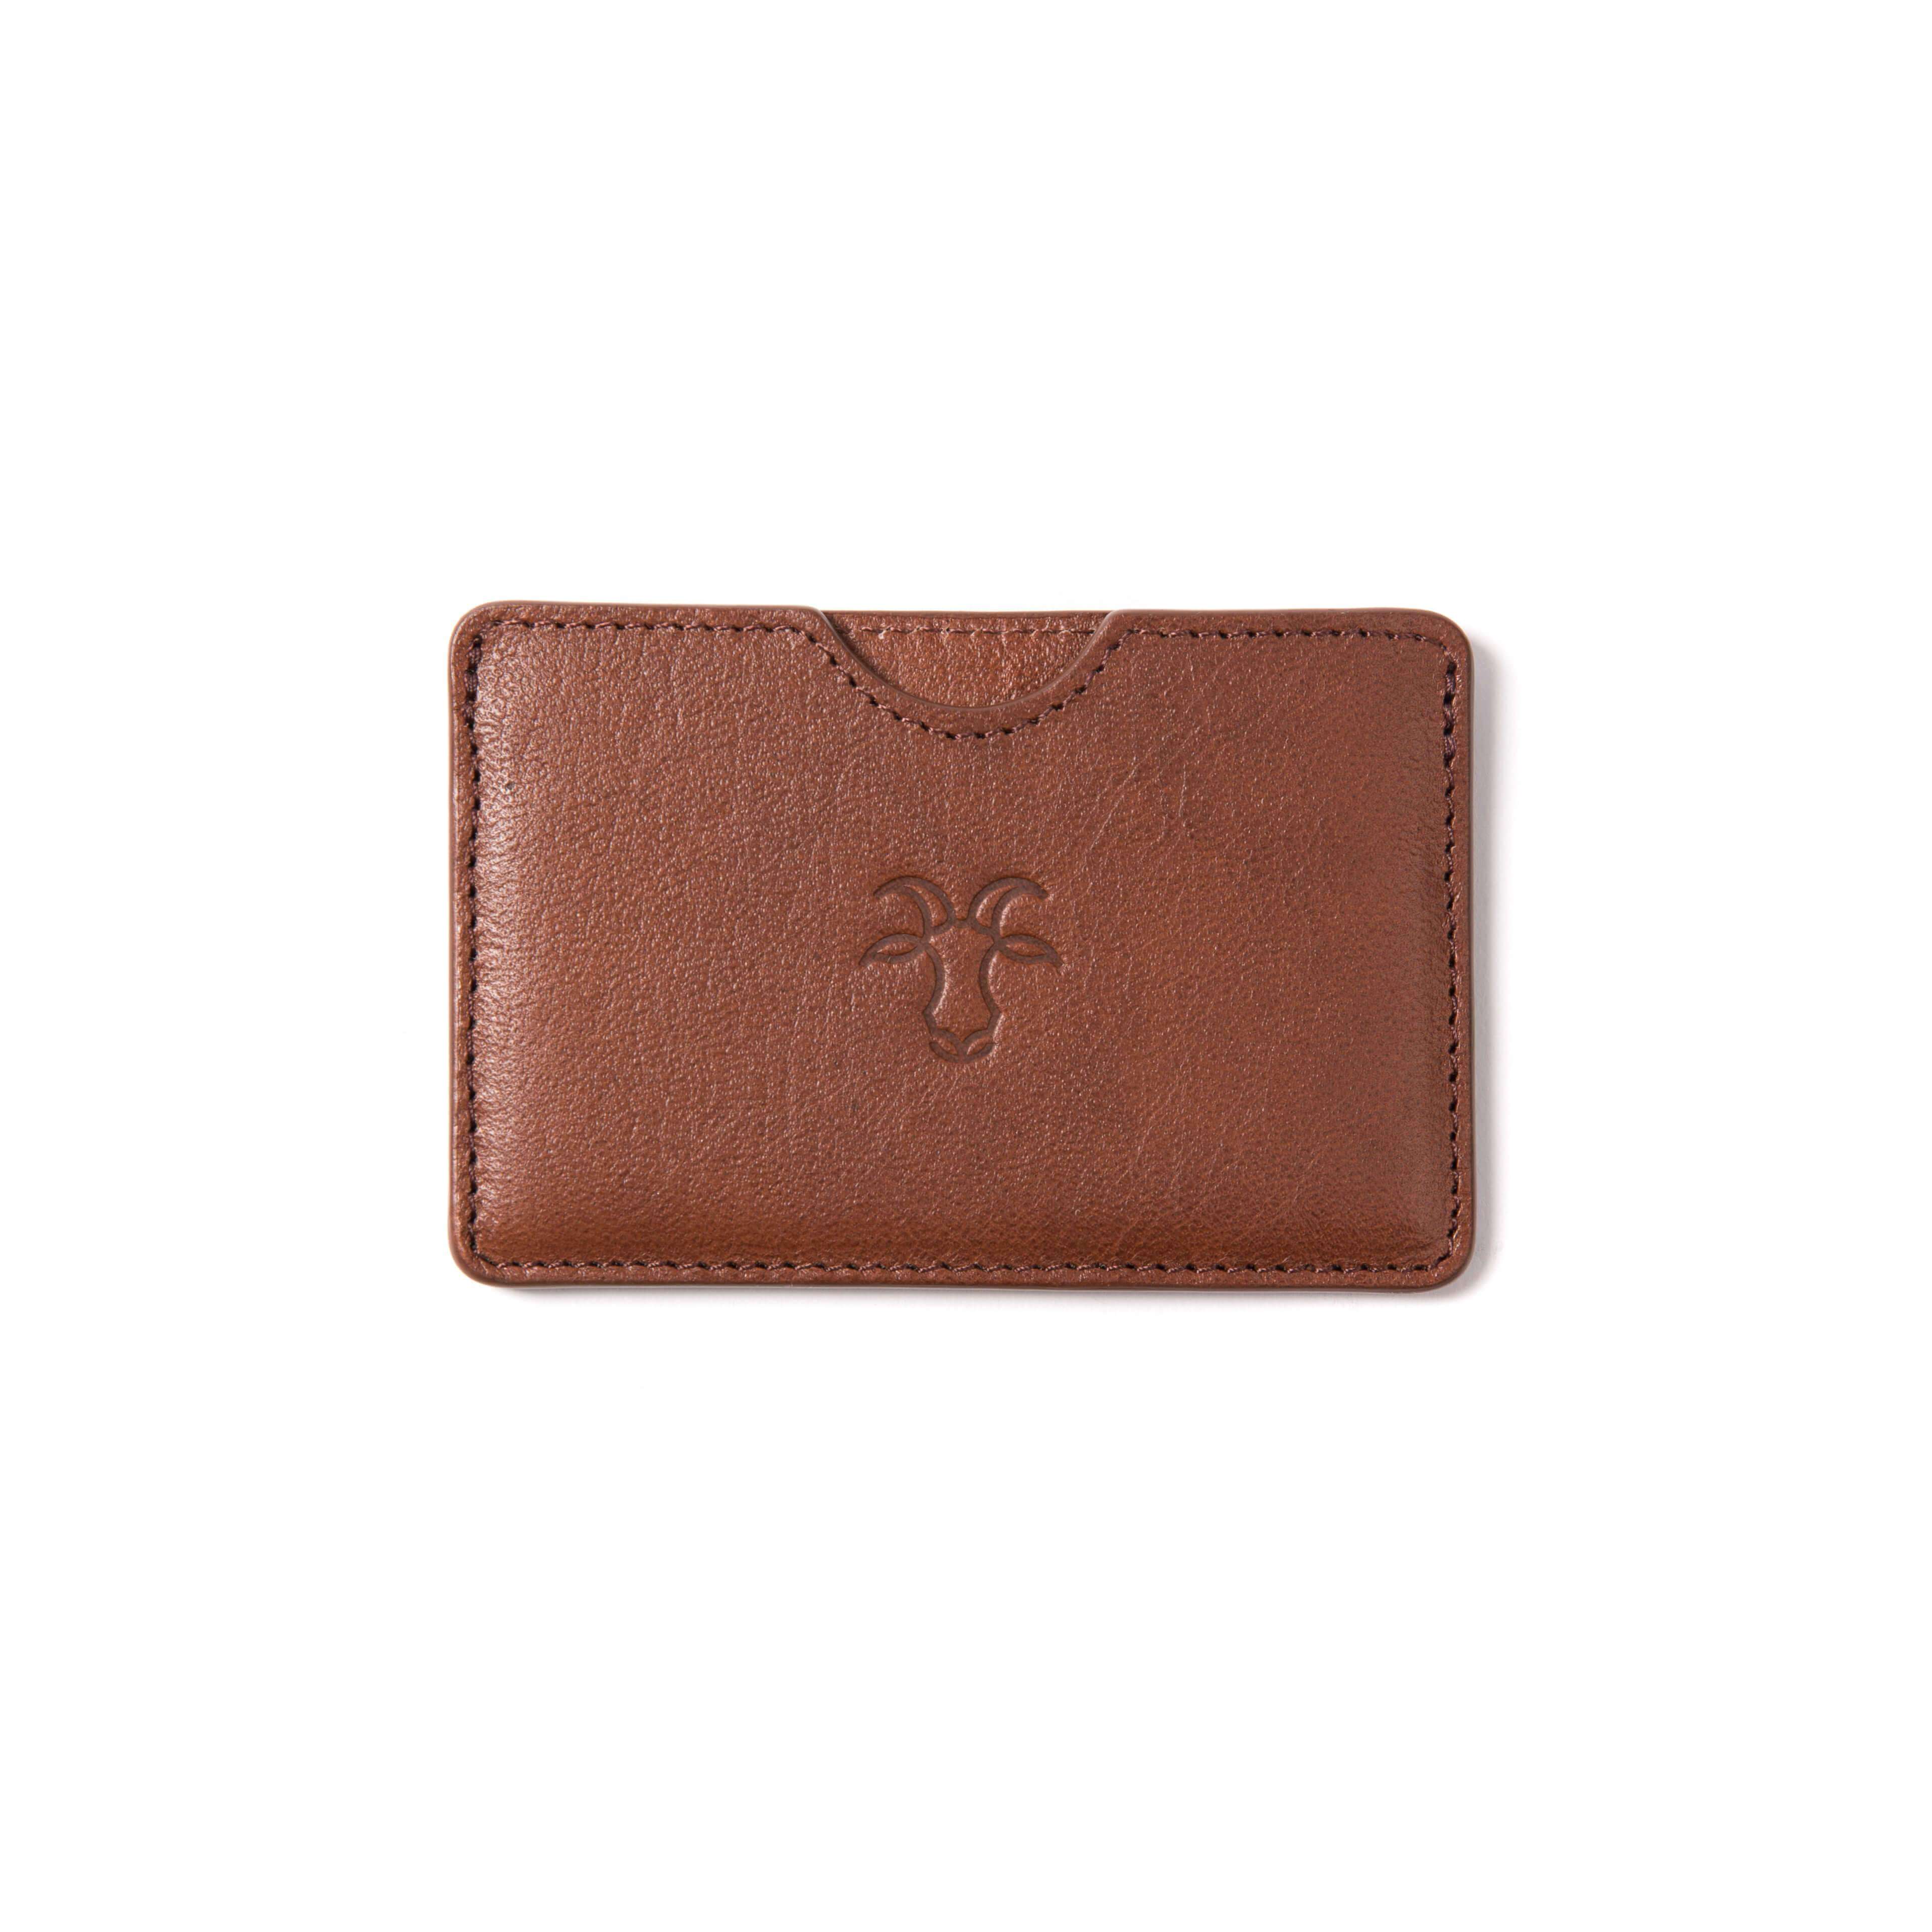 leather-credit-card-holder-wallet-brown